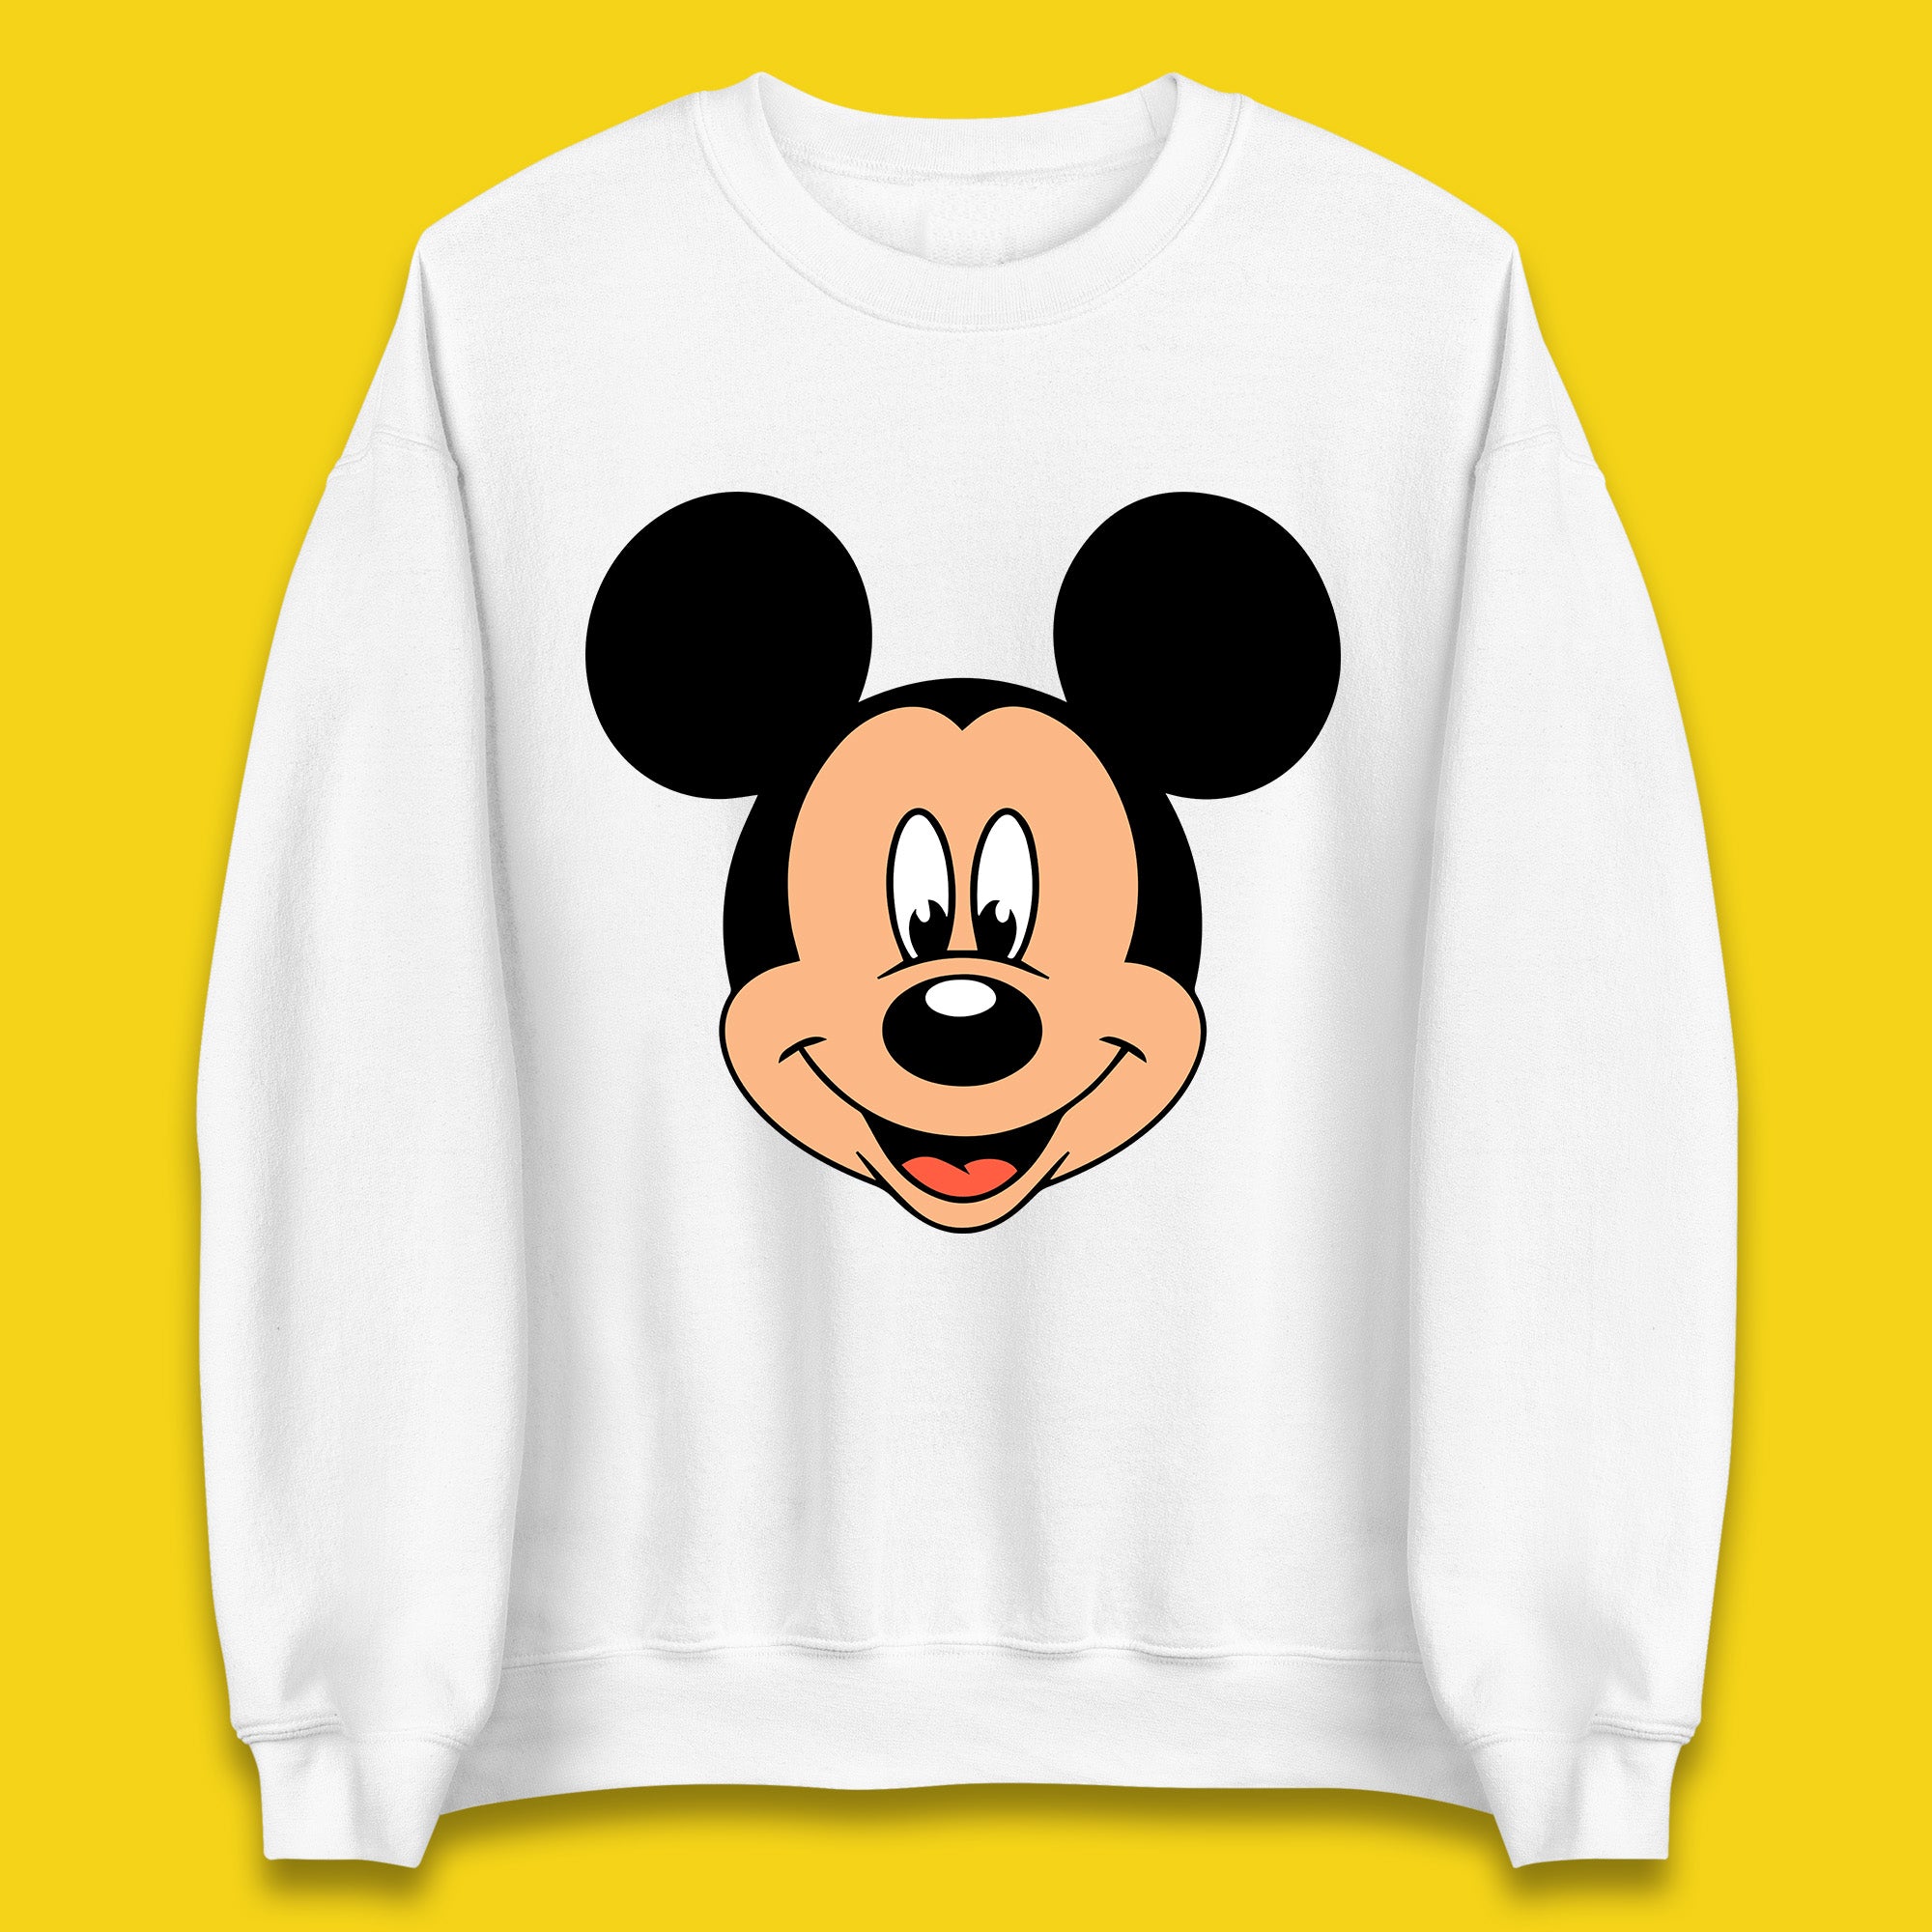 Disney Mickey Mouse Minnie Mouse Face Cartoon Character Disneyland Vacation Trip Disney World Unisex Sweatshirt